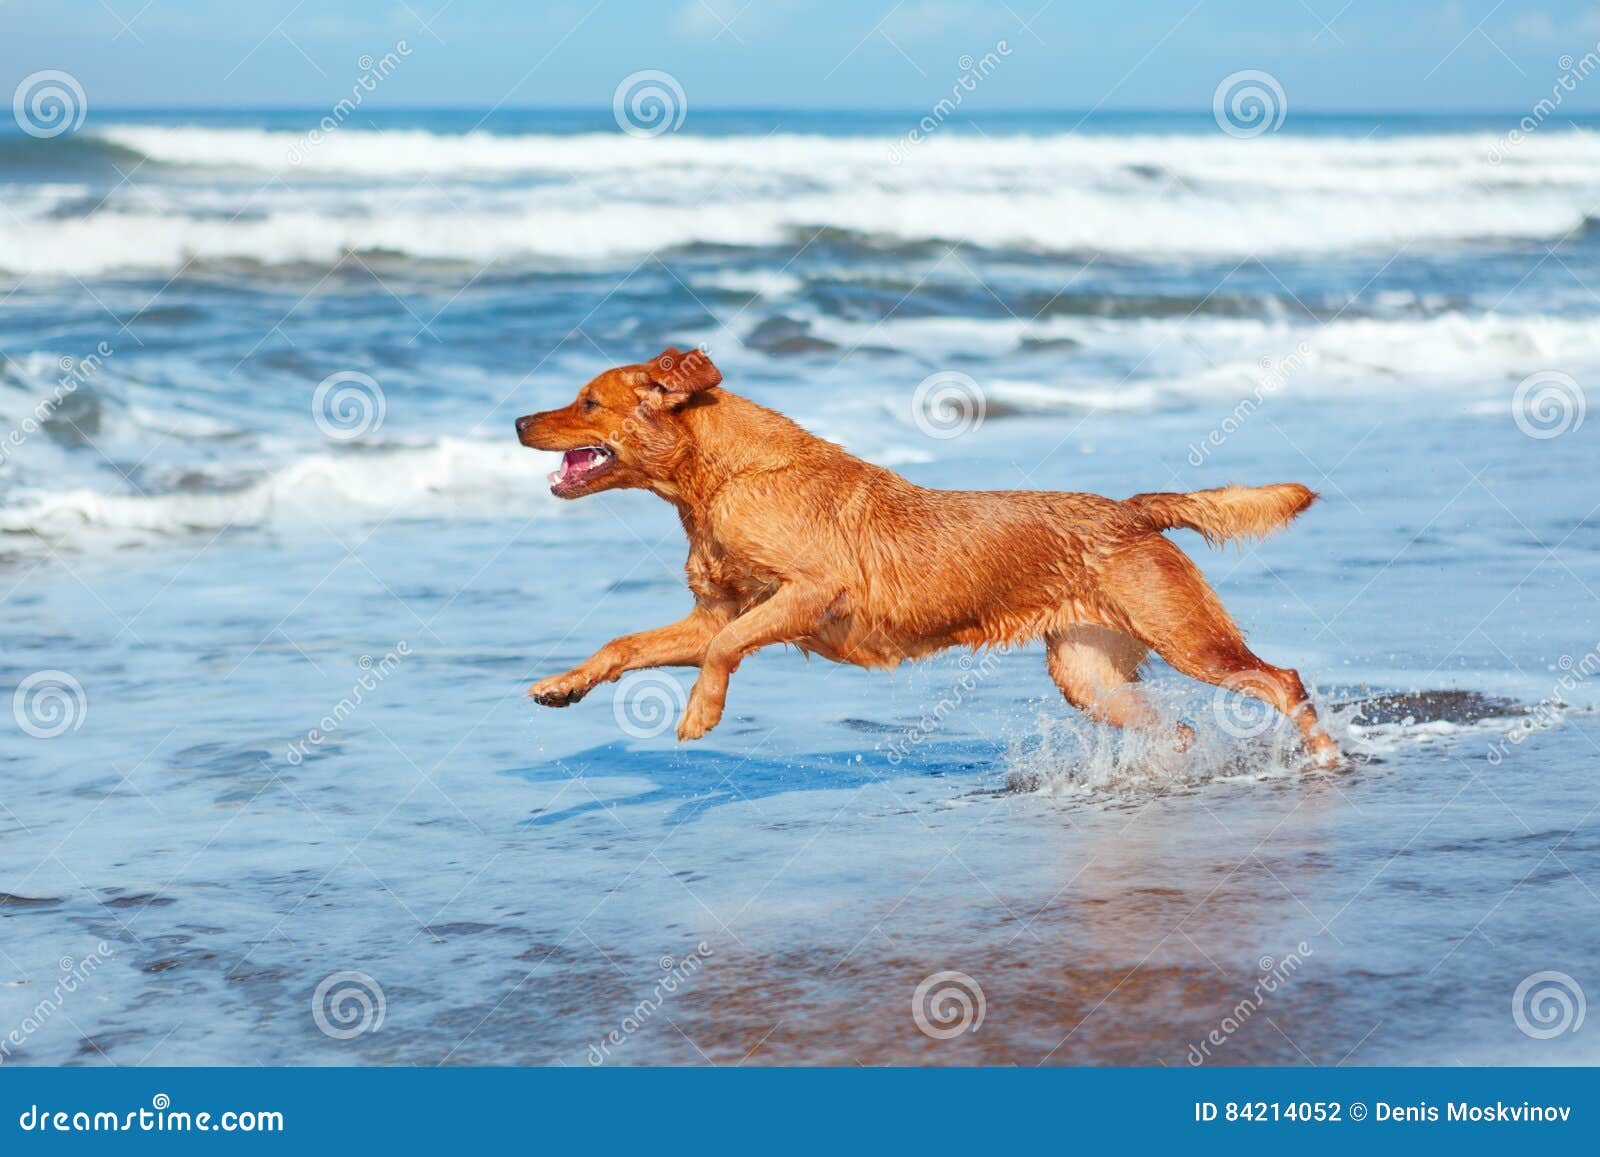 dog run by sand beach along sea surf